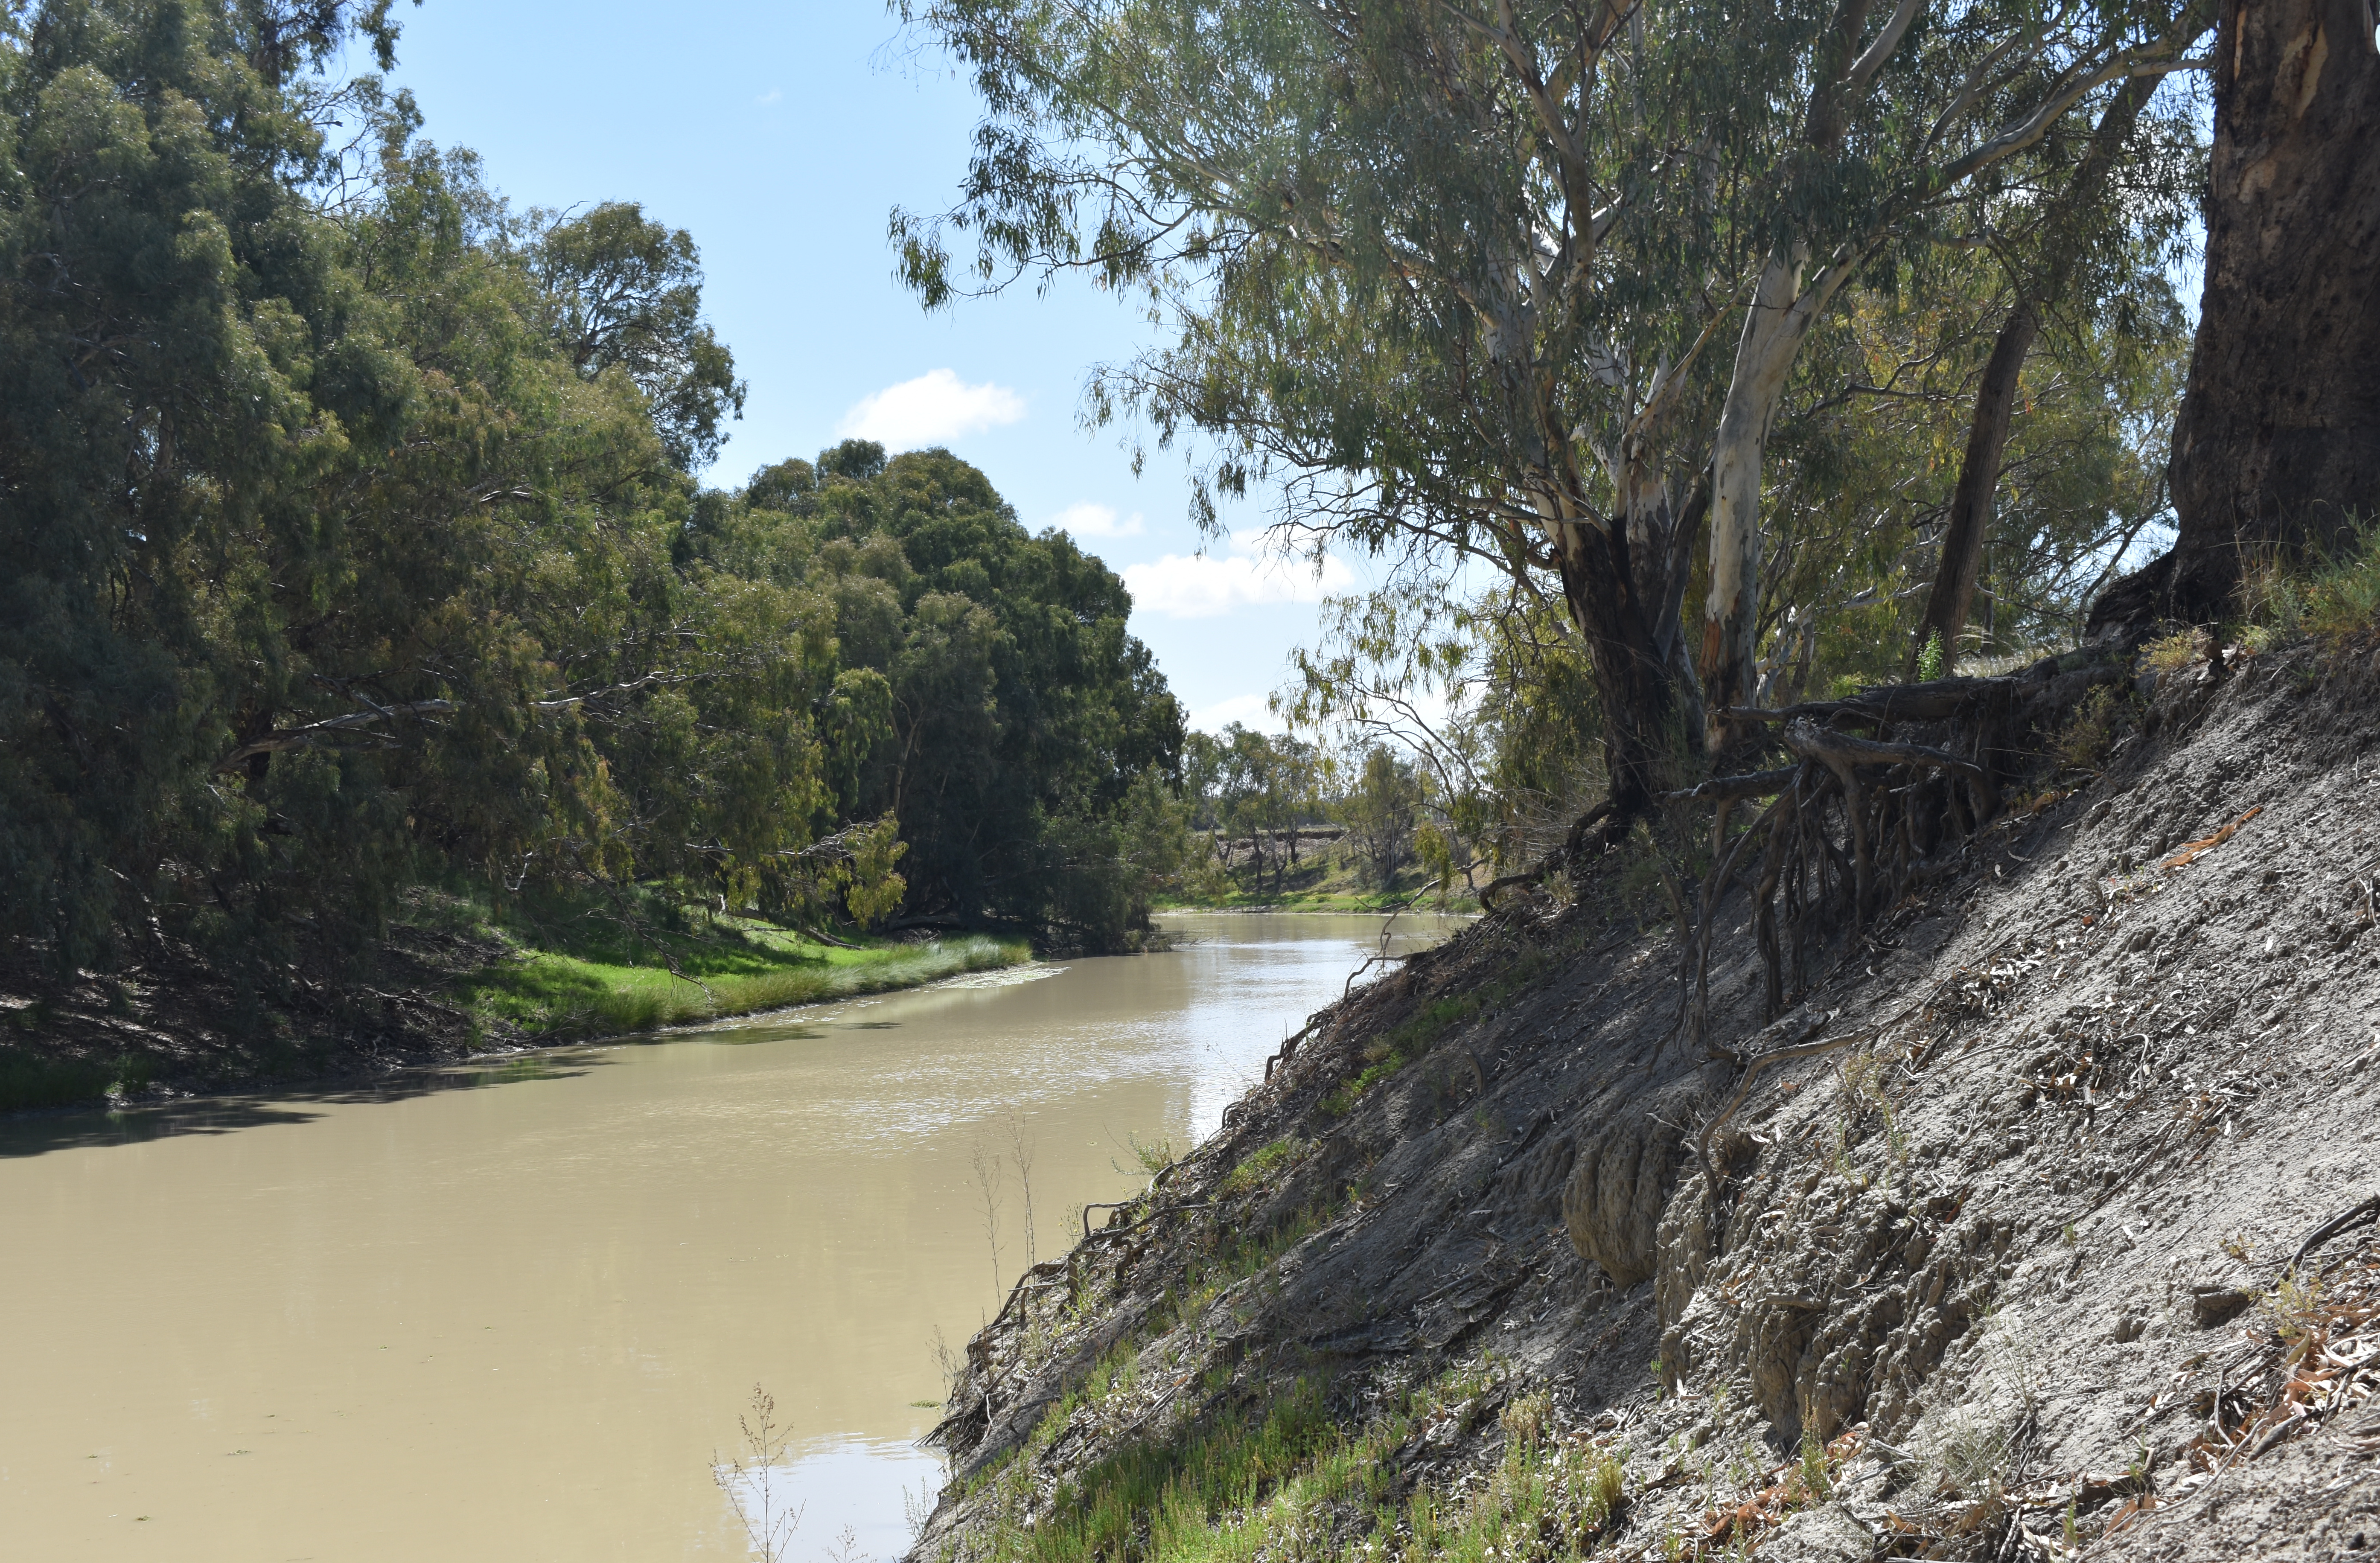 Река дарлинг полноводна круглый. Река Дарлинг. Глубина реки Дарминг Австралии. Река Дарлинг пересыхает.